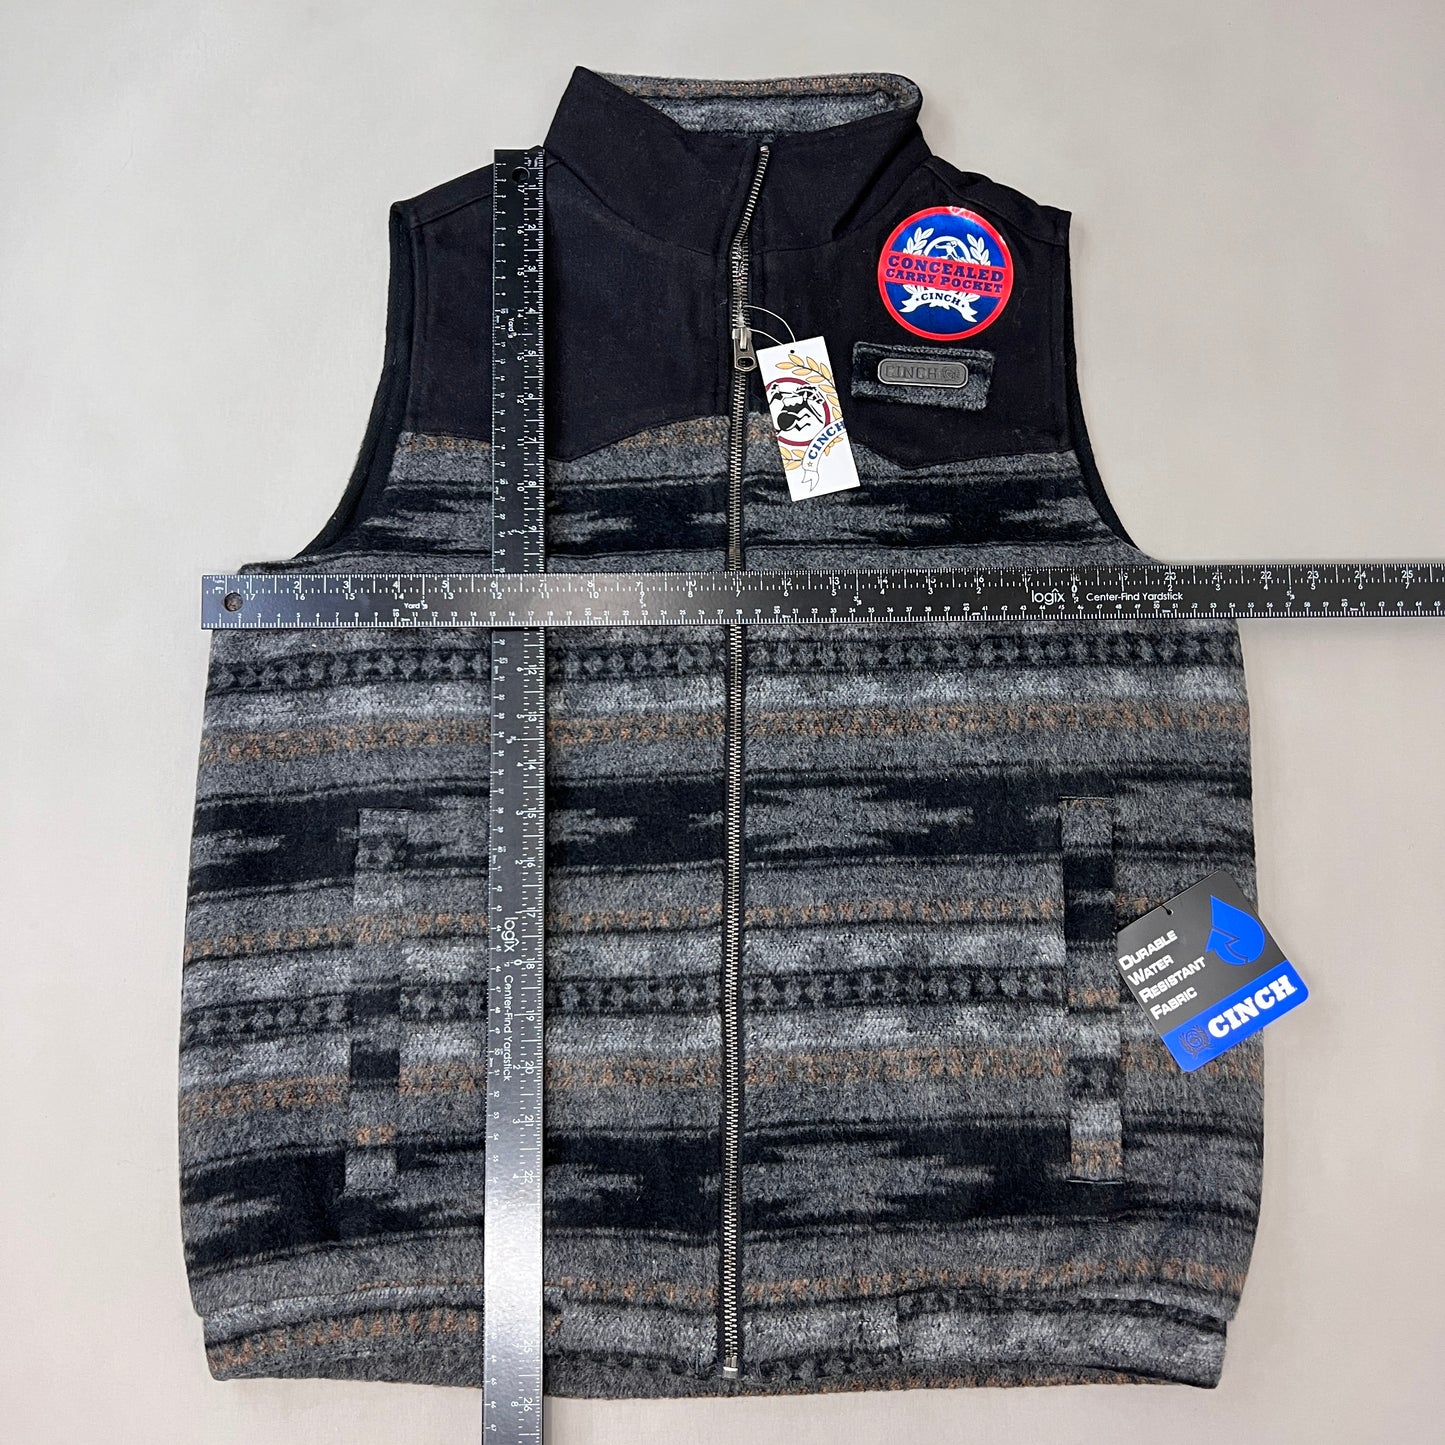 CINCH Wooly Concealed Carry Vest Men's SZ XS Black MWV1543006 (New)